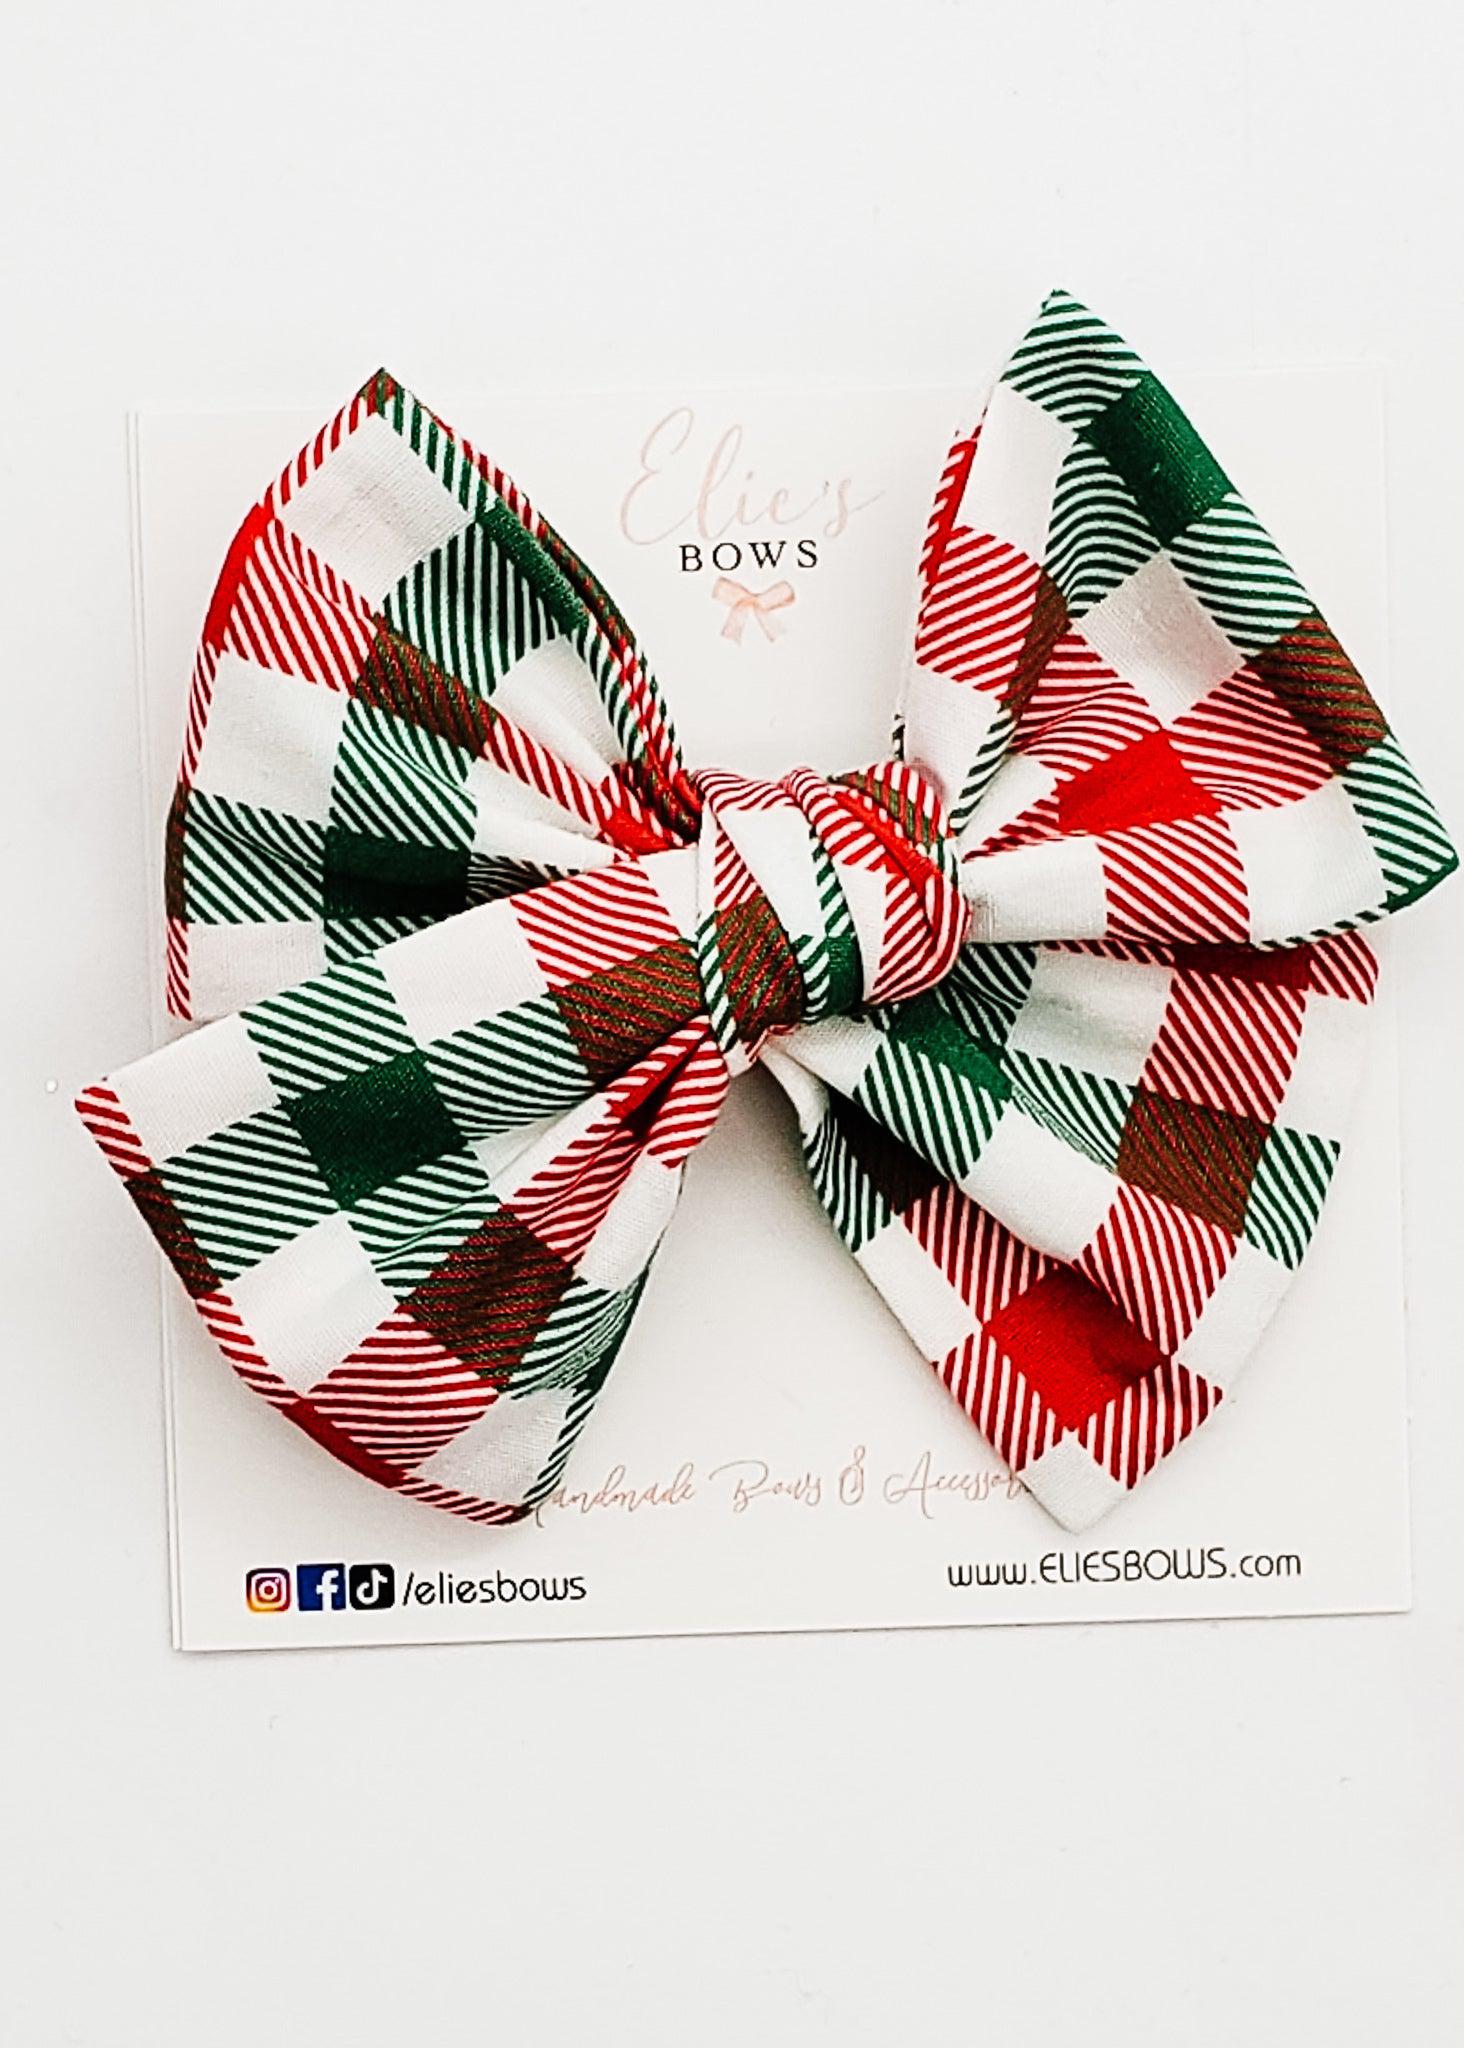 Green & White Plaid - Elie Fabric Bow - 3.5"-Bows-Elie’s Bows